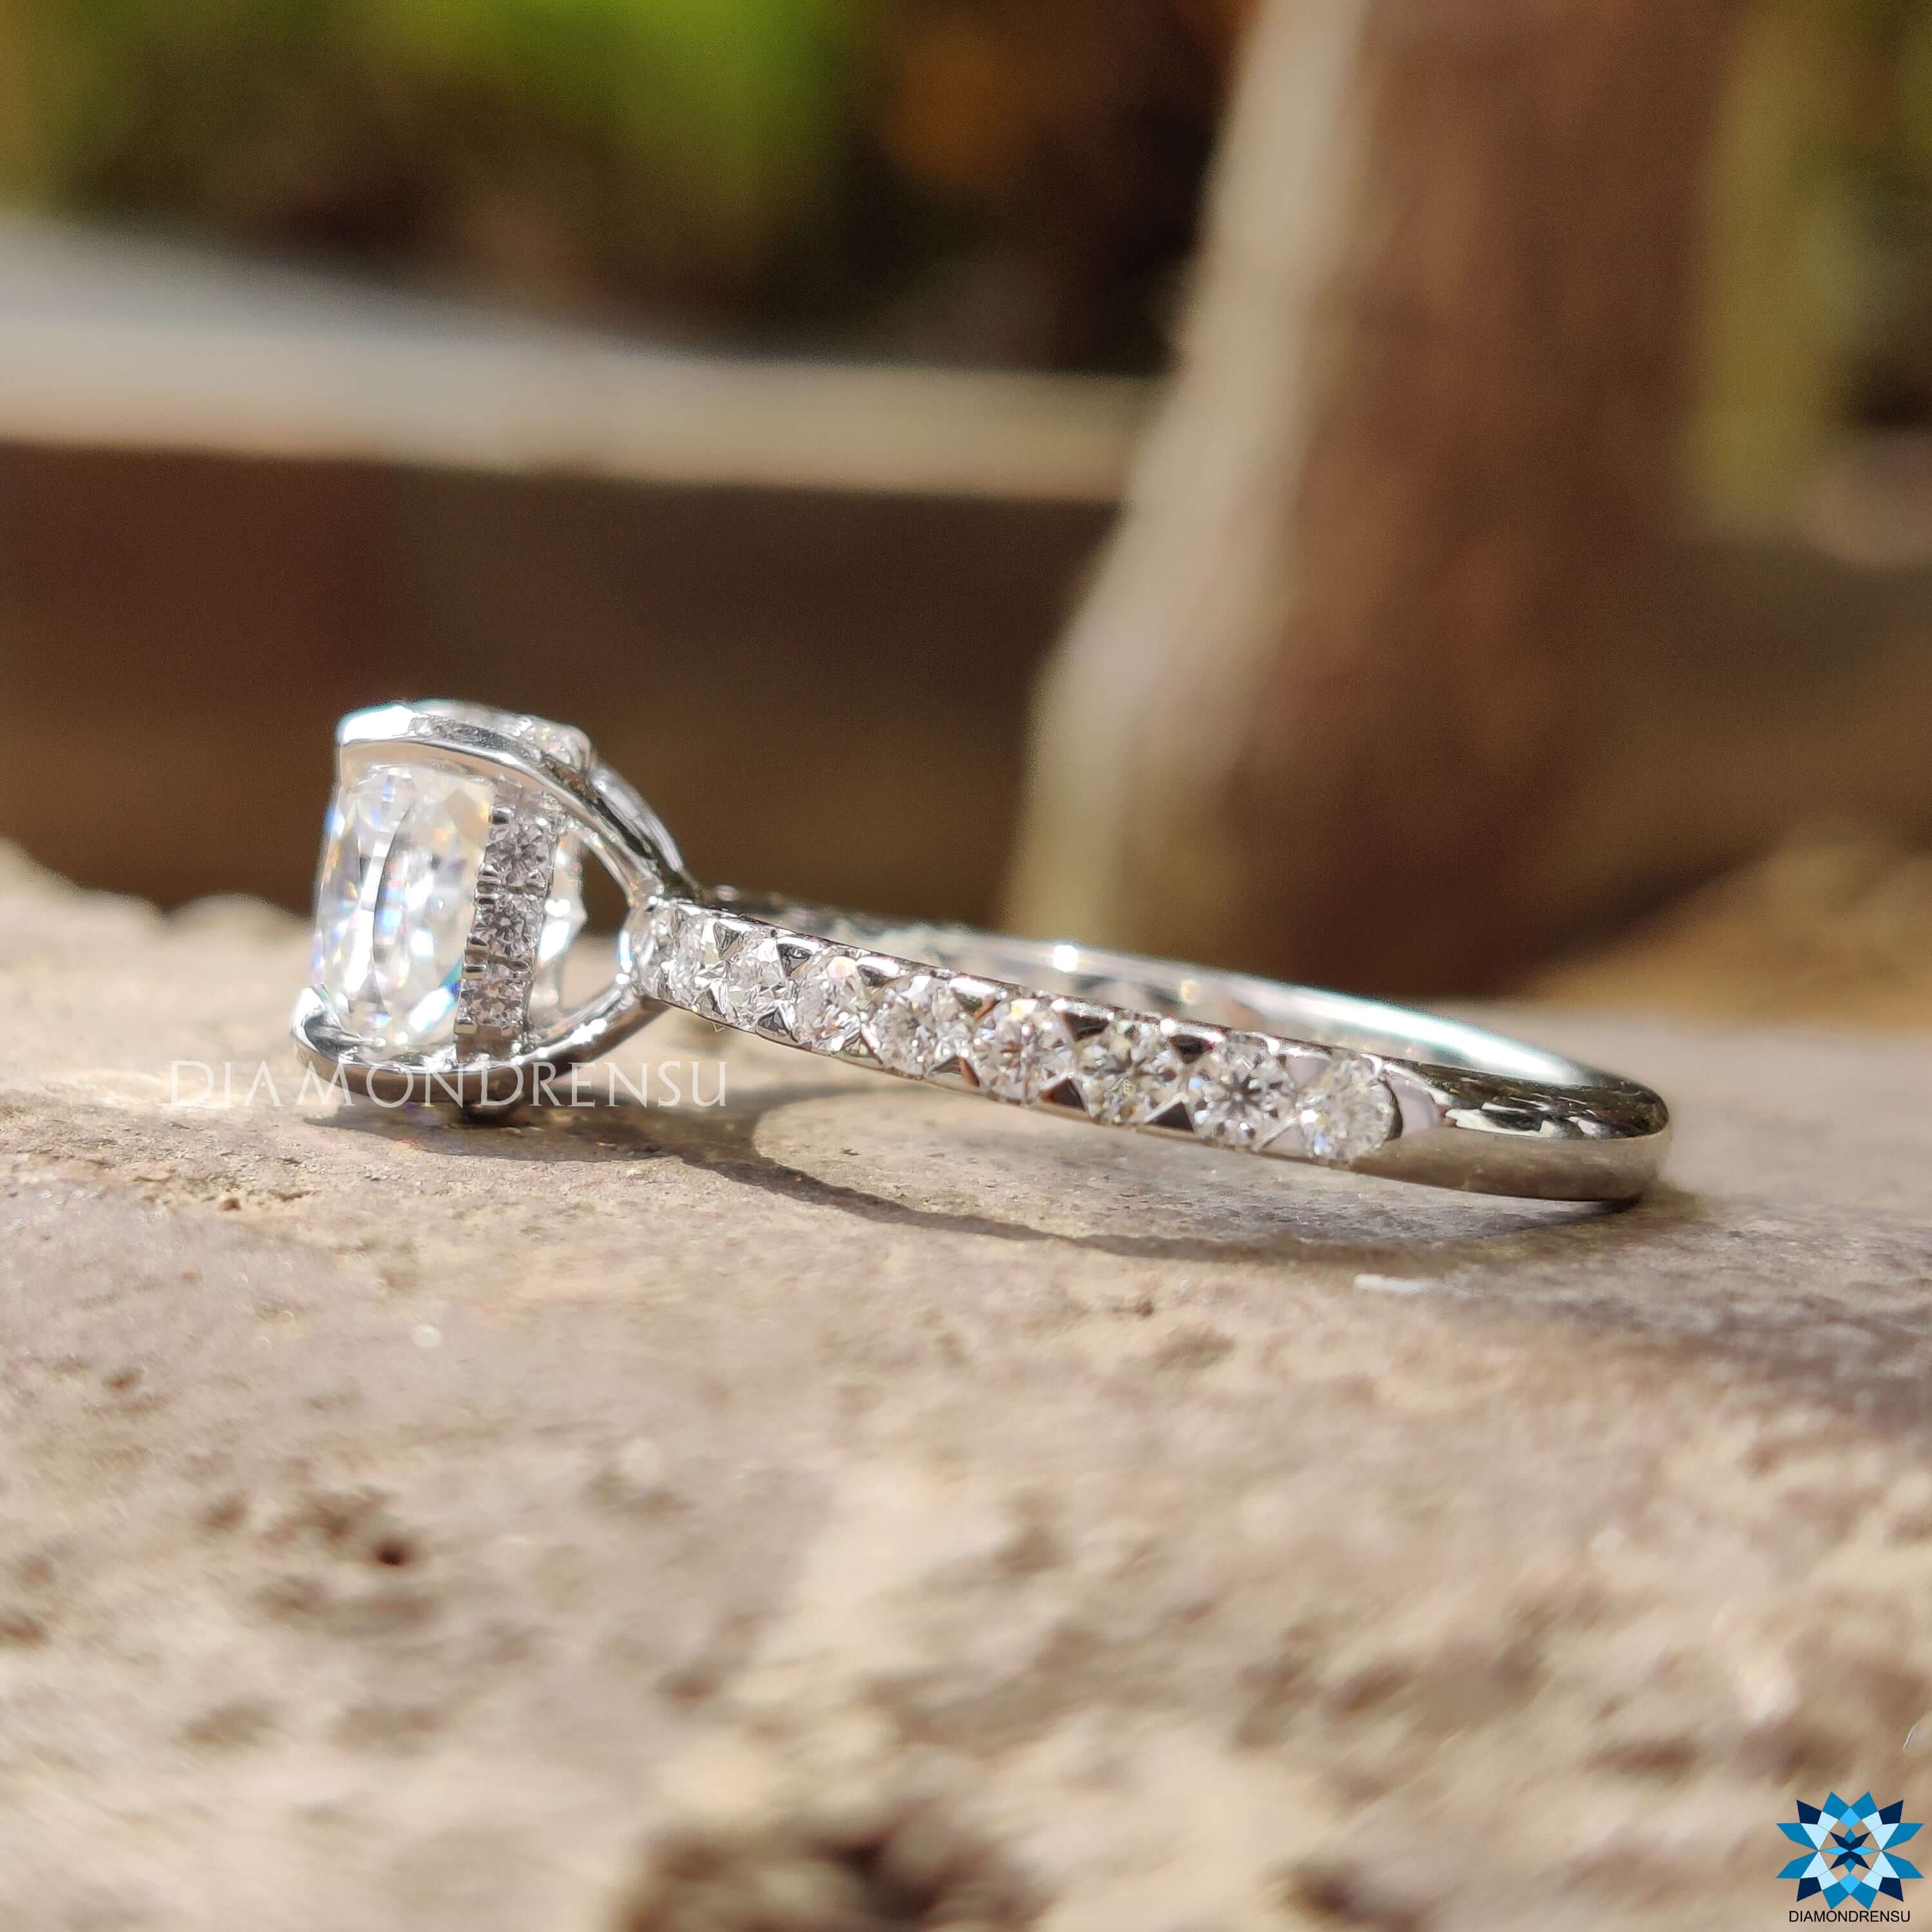 engagement ring - diamondrensu